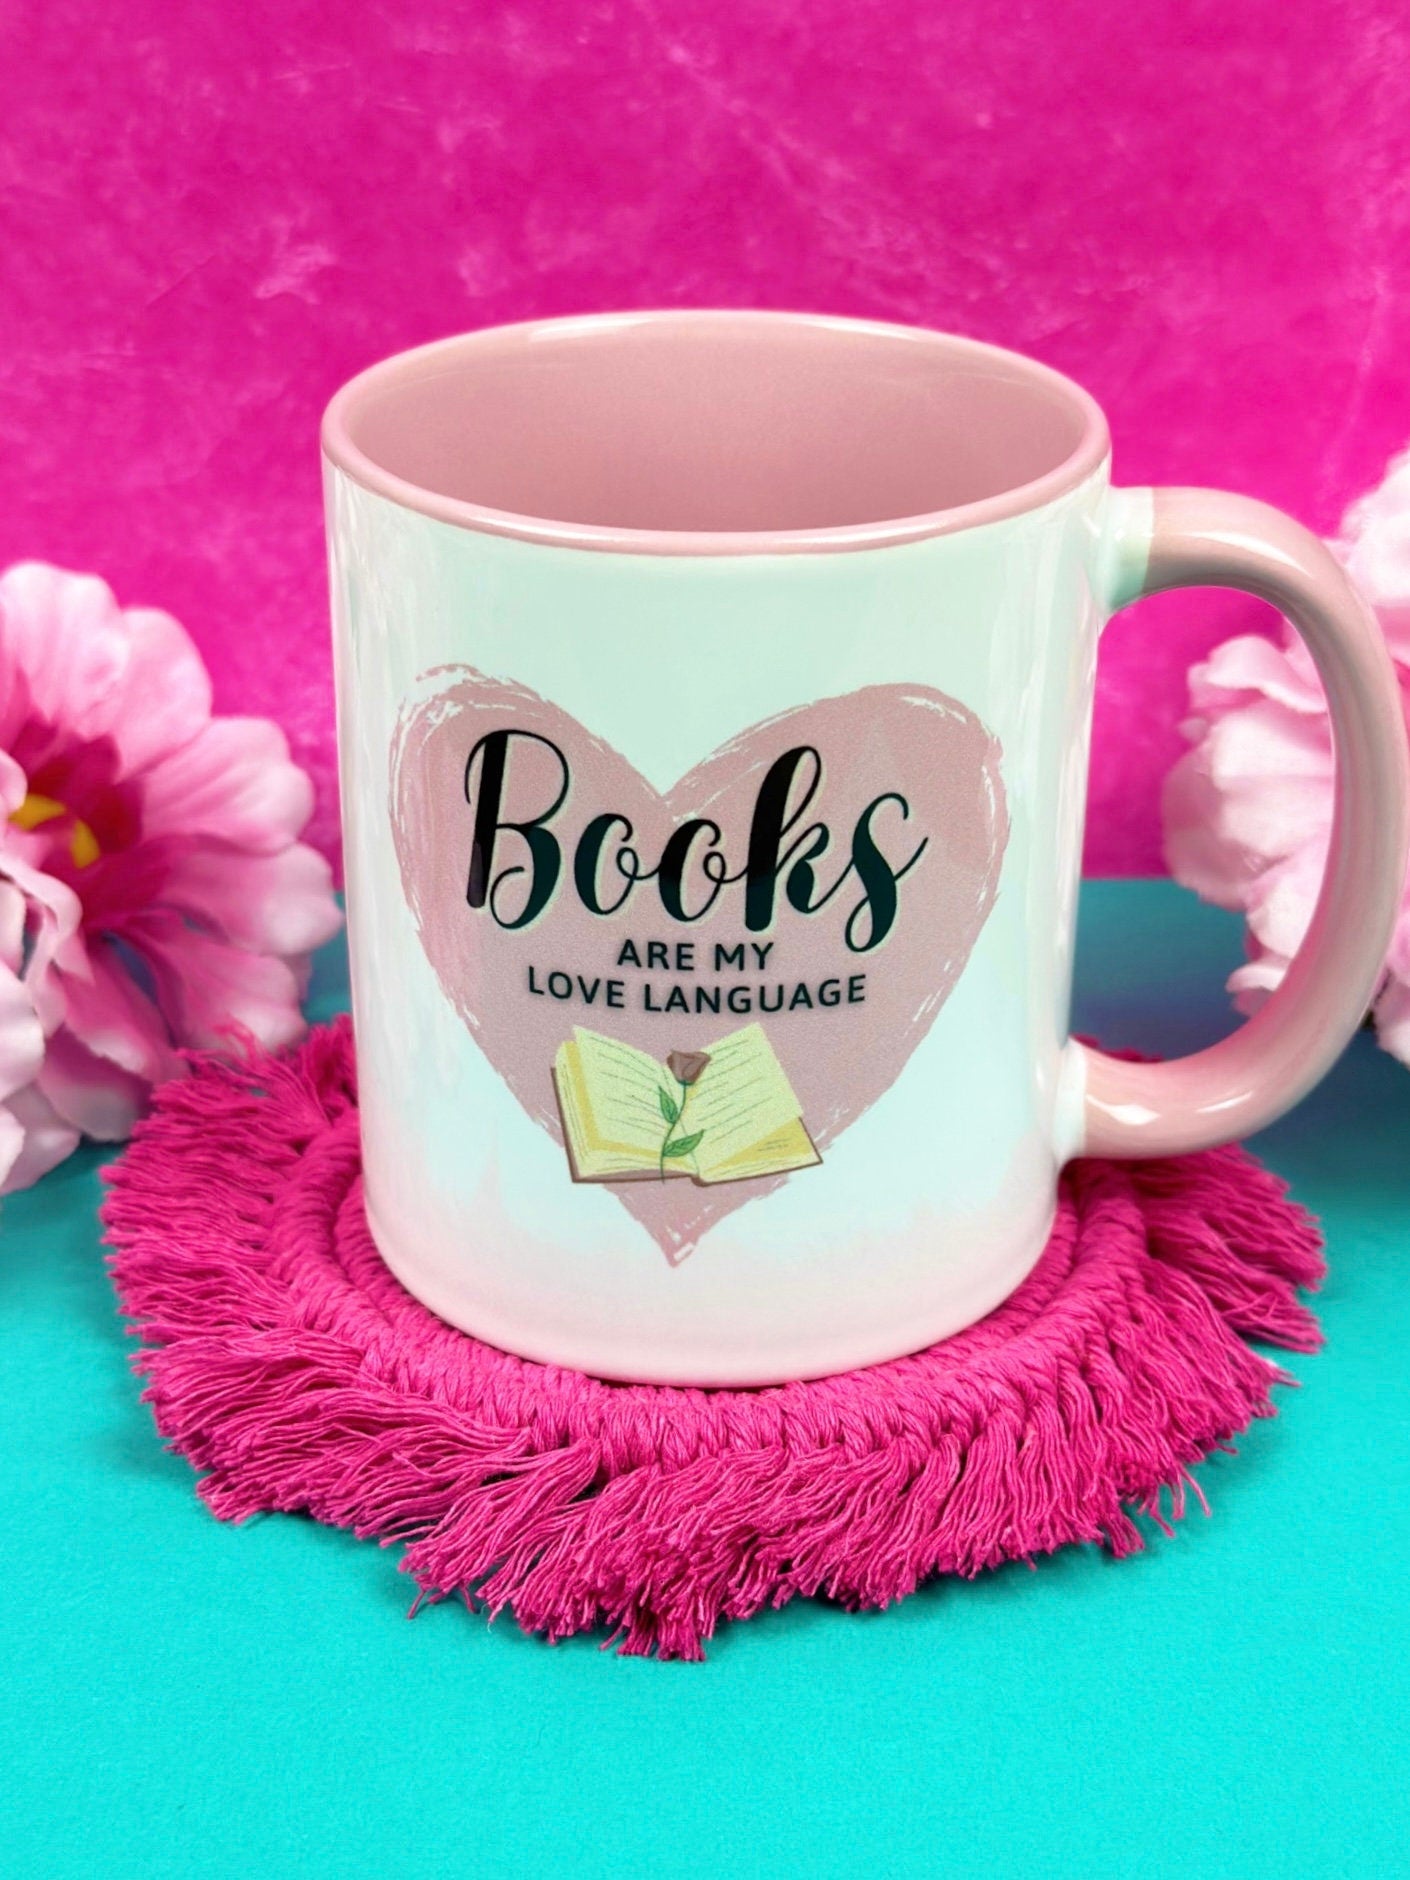 Books Are My Love Language Mug, 11 oz. Ceramic Coffee Mug, Bookish Coffee Cup, Book Lover Gift, Pink and White Coffee Mug, Coffee Lover Gift